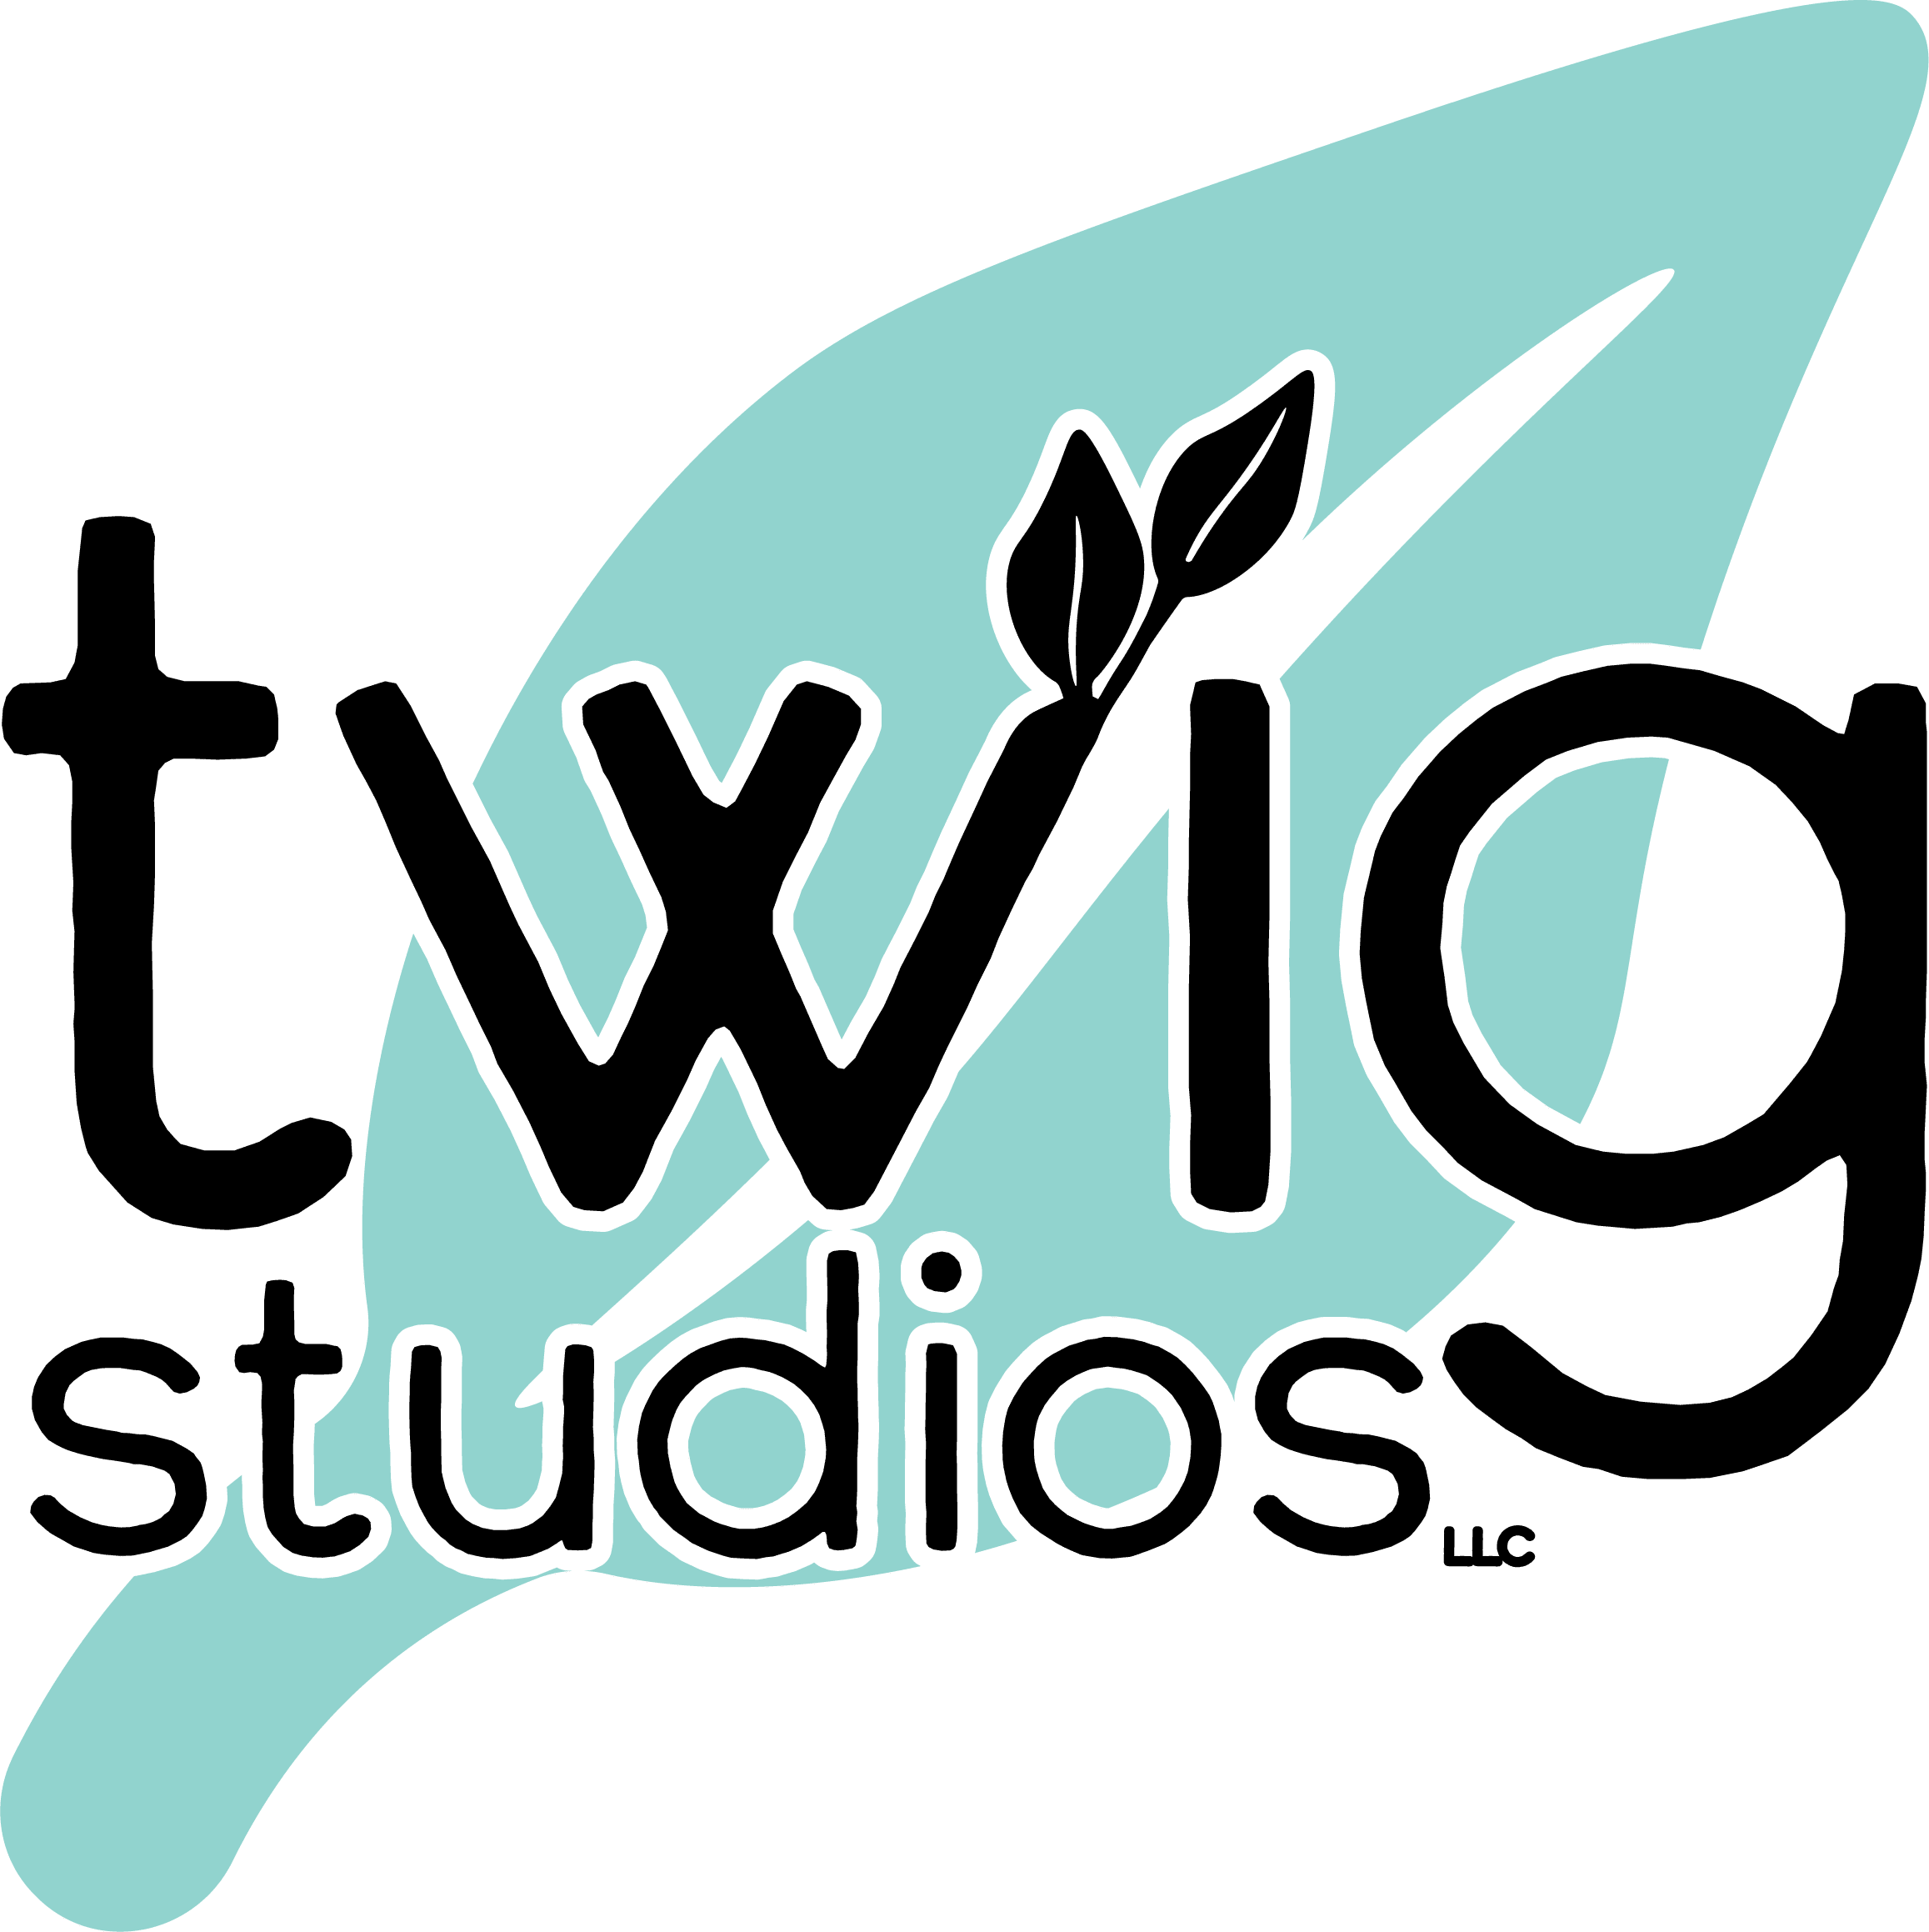 Twig Studios